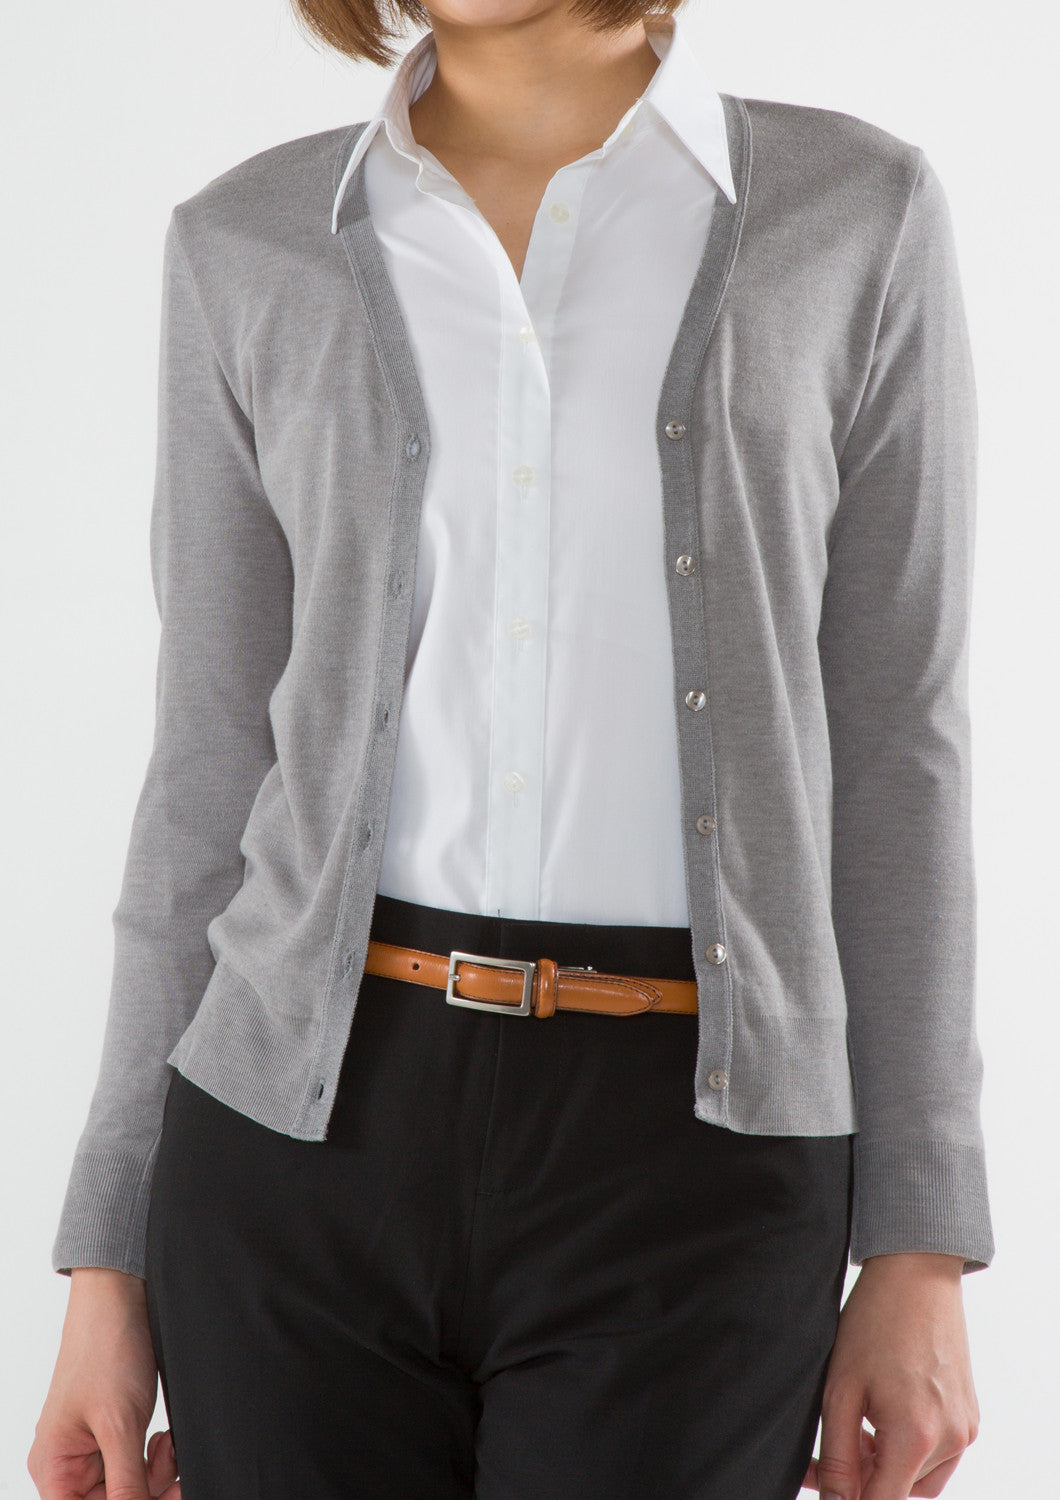 Washable Lightweight  Long Sleeve Cardigan - LEONIS SHIRTS & FAVORITES